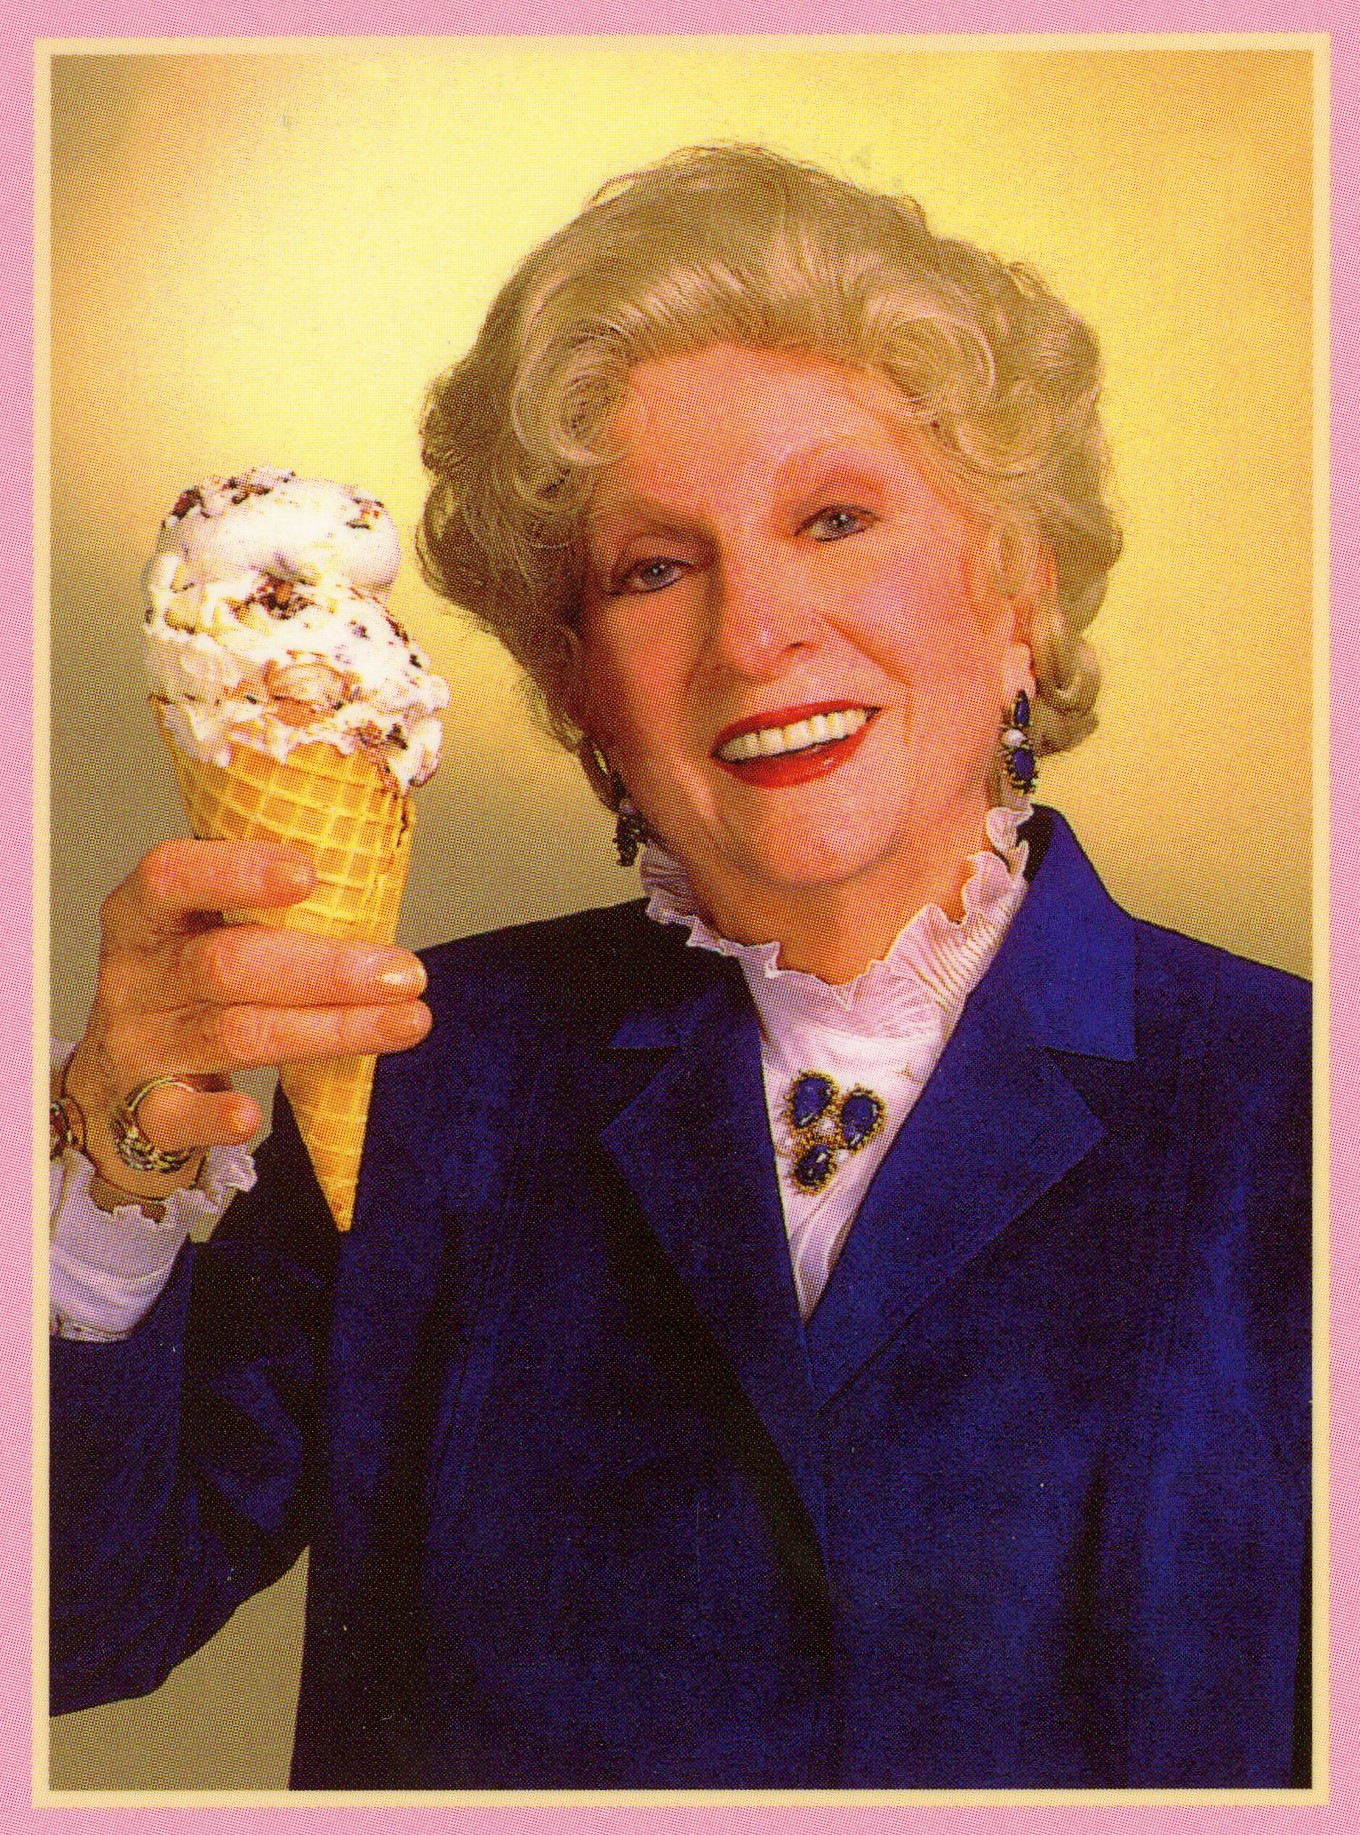 Rose Mattus holding an ice cream cone